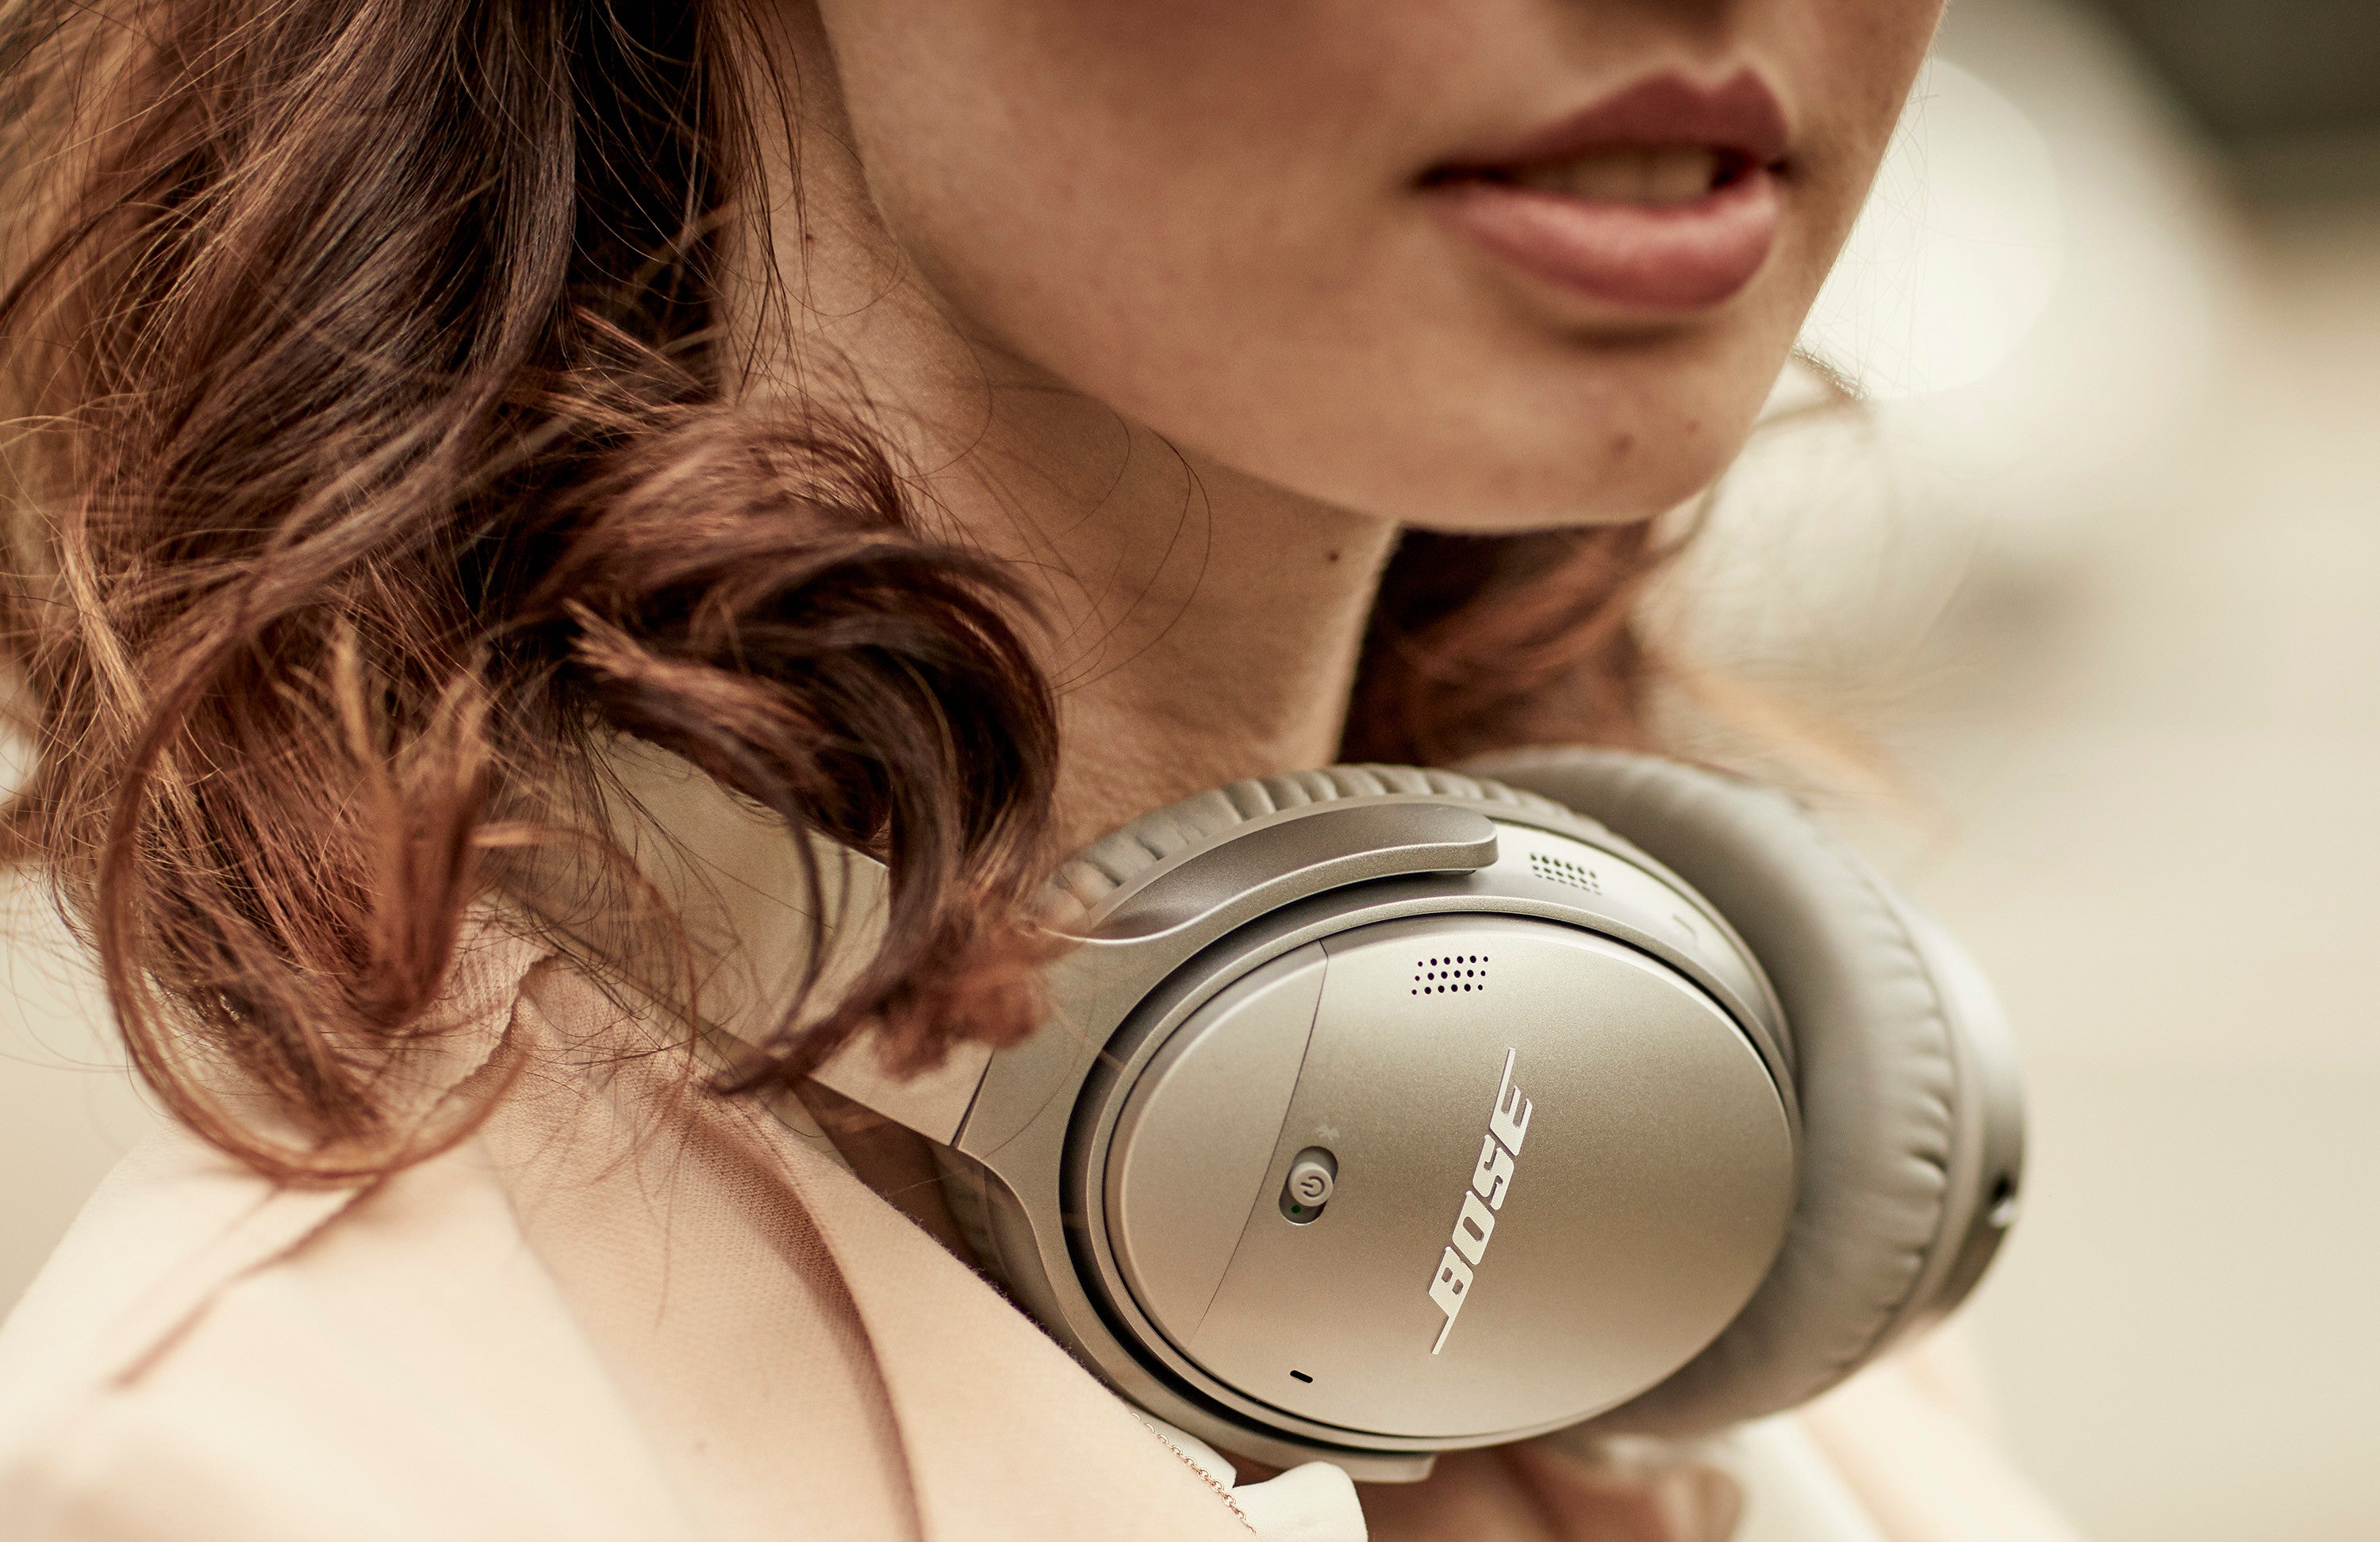 Bose launches Google Assistant-optimized QuietComfort 35 II headphones